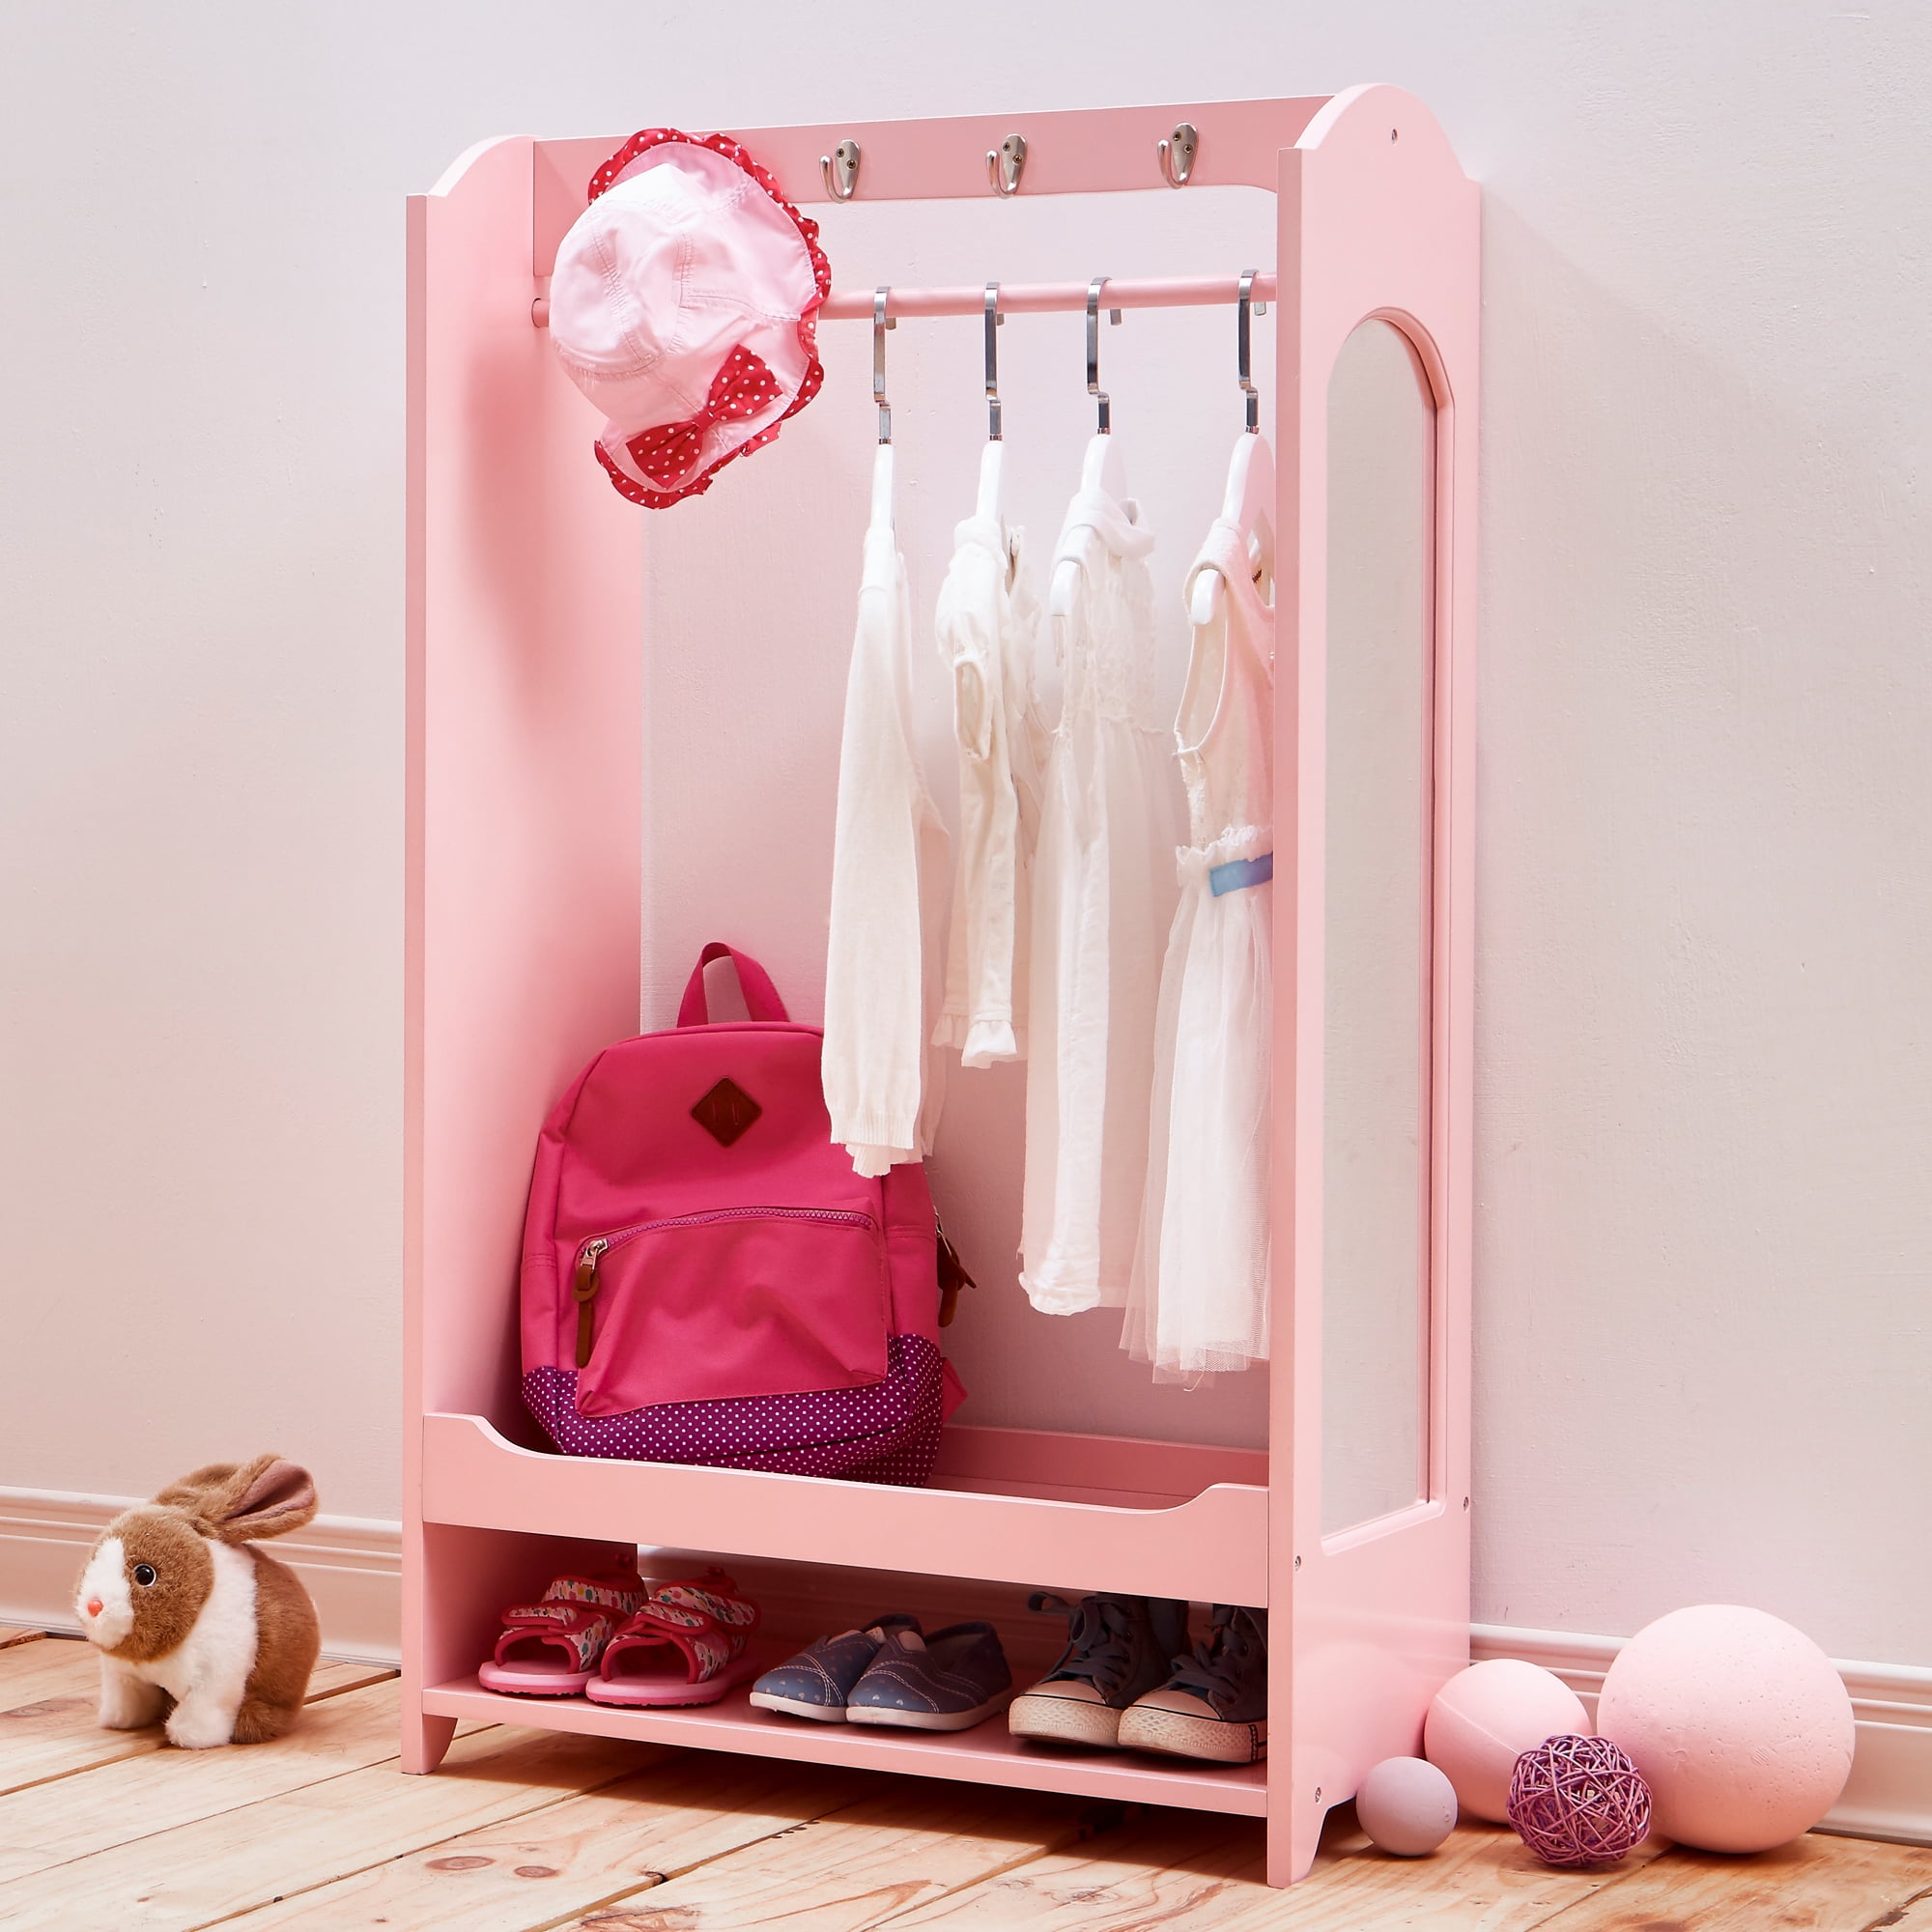 HX5B 5Pieces Wooden Baby Closet Size Divider Organizer Hanger Clothing  Dividers for Newborn Nursery Decor Infant